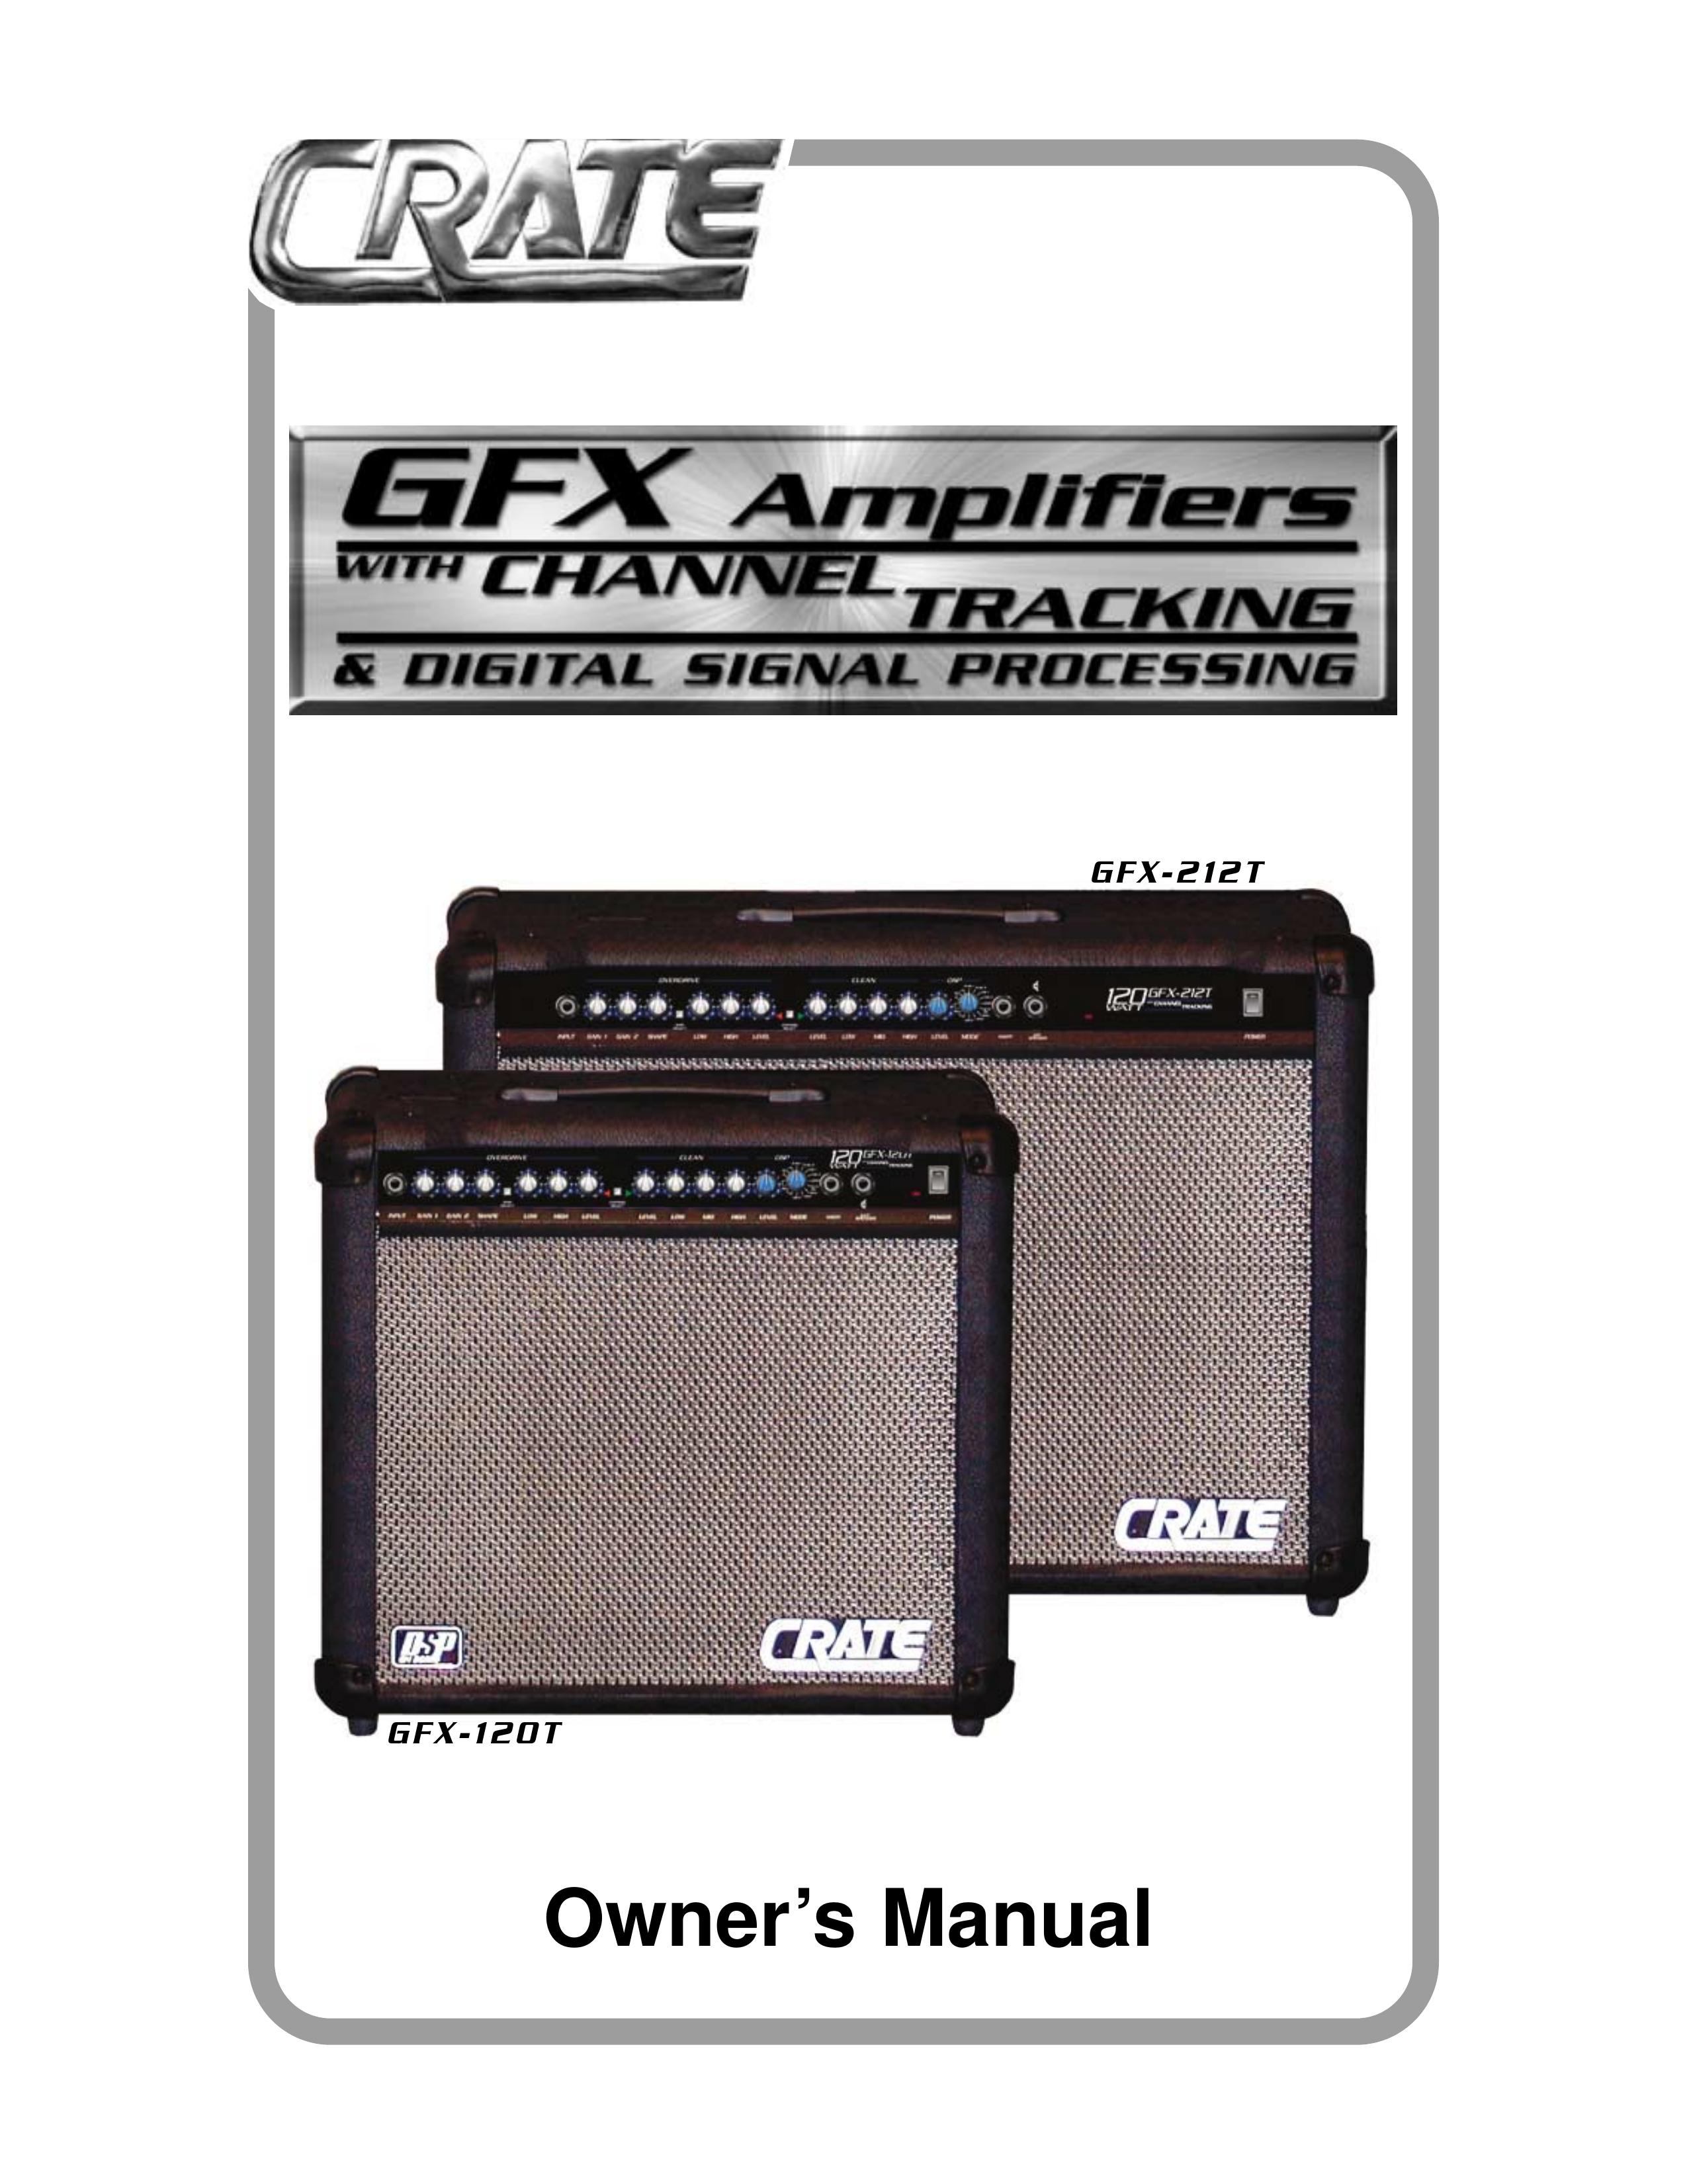 Crate Amplifiers GFX-212T Musical Instrument Amplifier User Manual